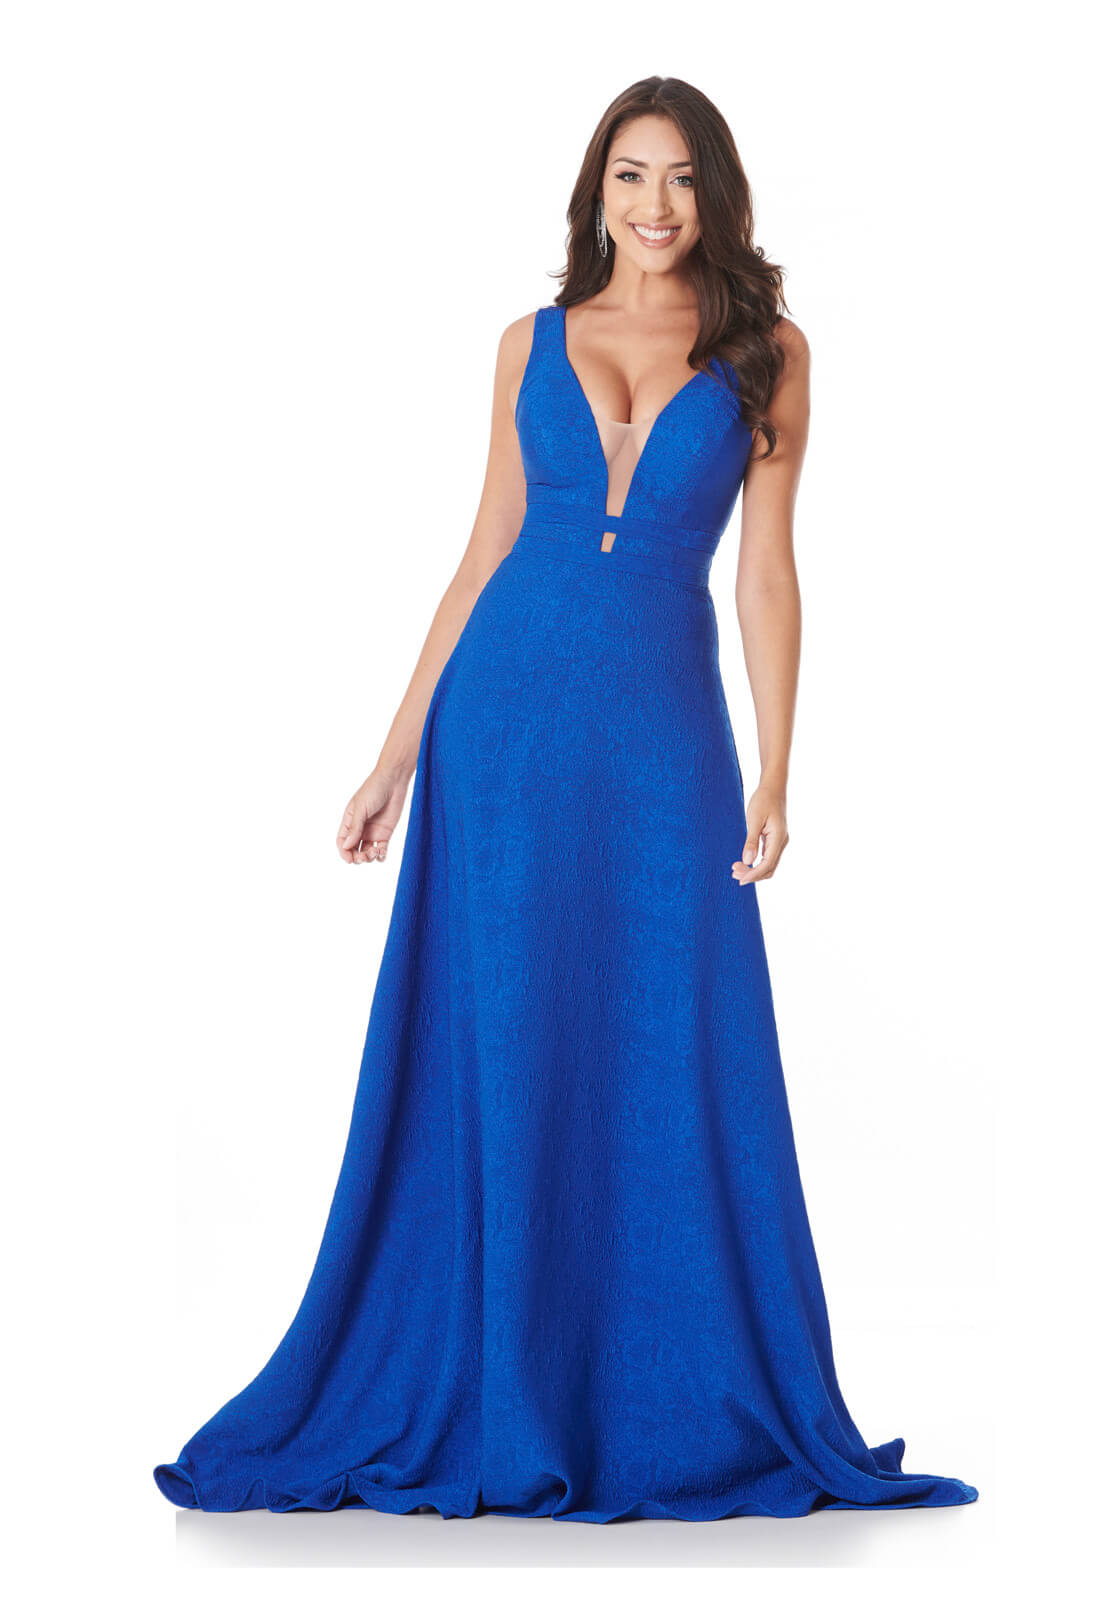 Vestido Evasê Jacquard Azul Bic